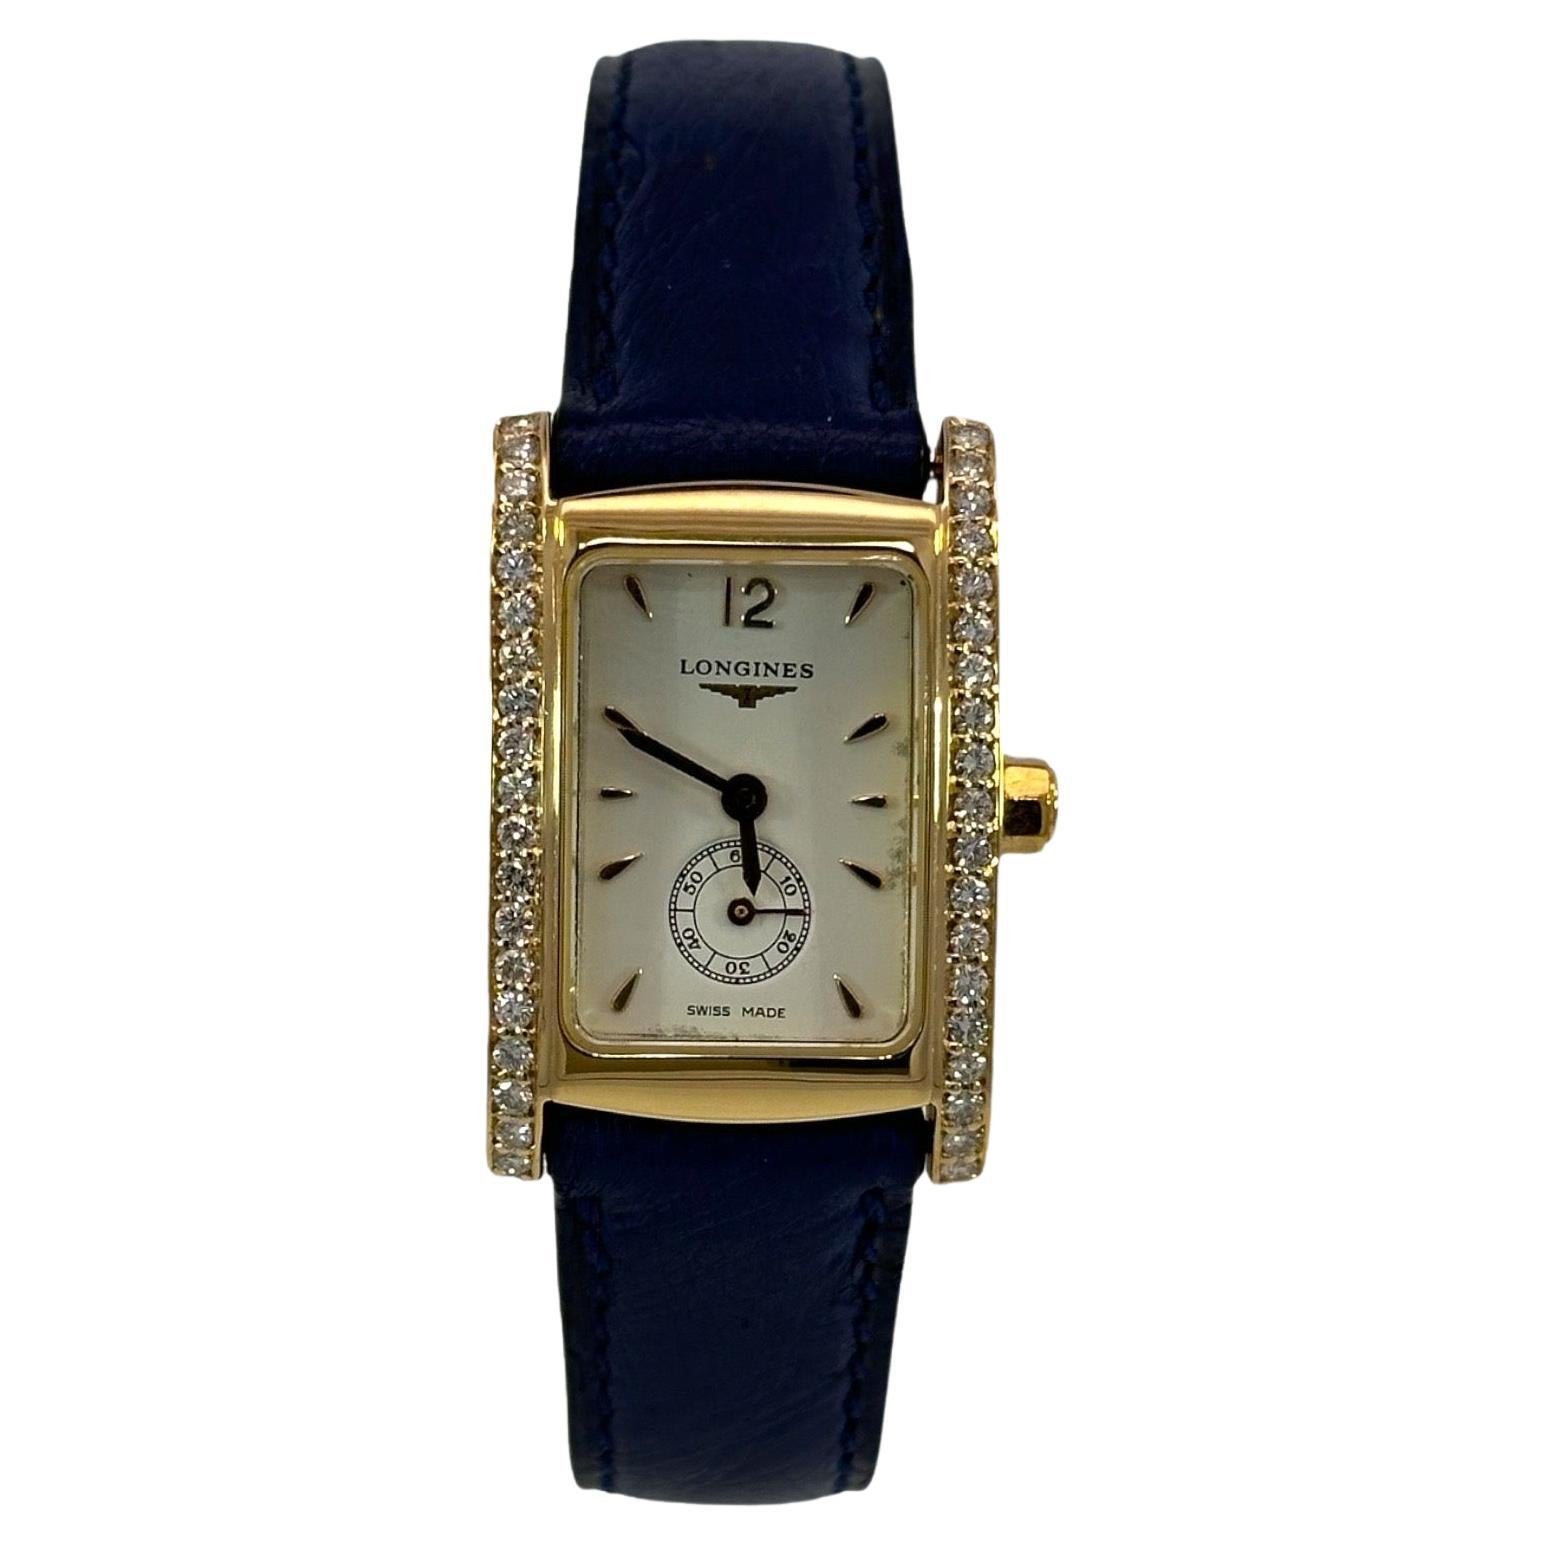 18kt Yellow Gold Longines Dolce Vita Ladies Wrist Watch with Diamonds